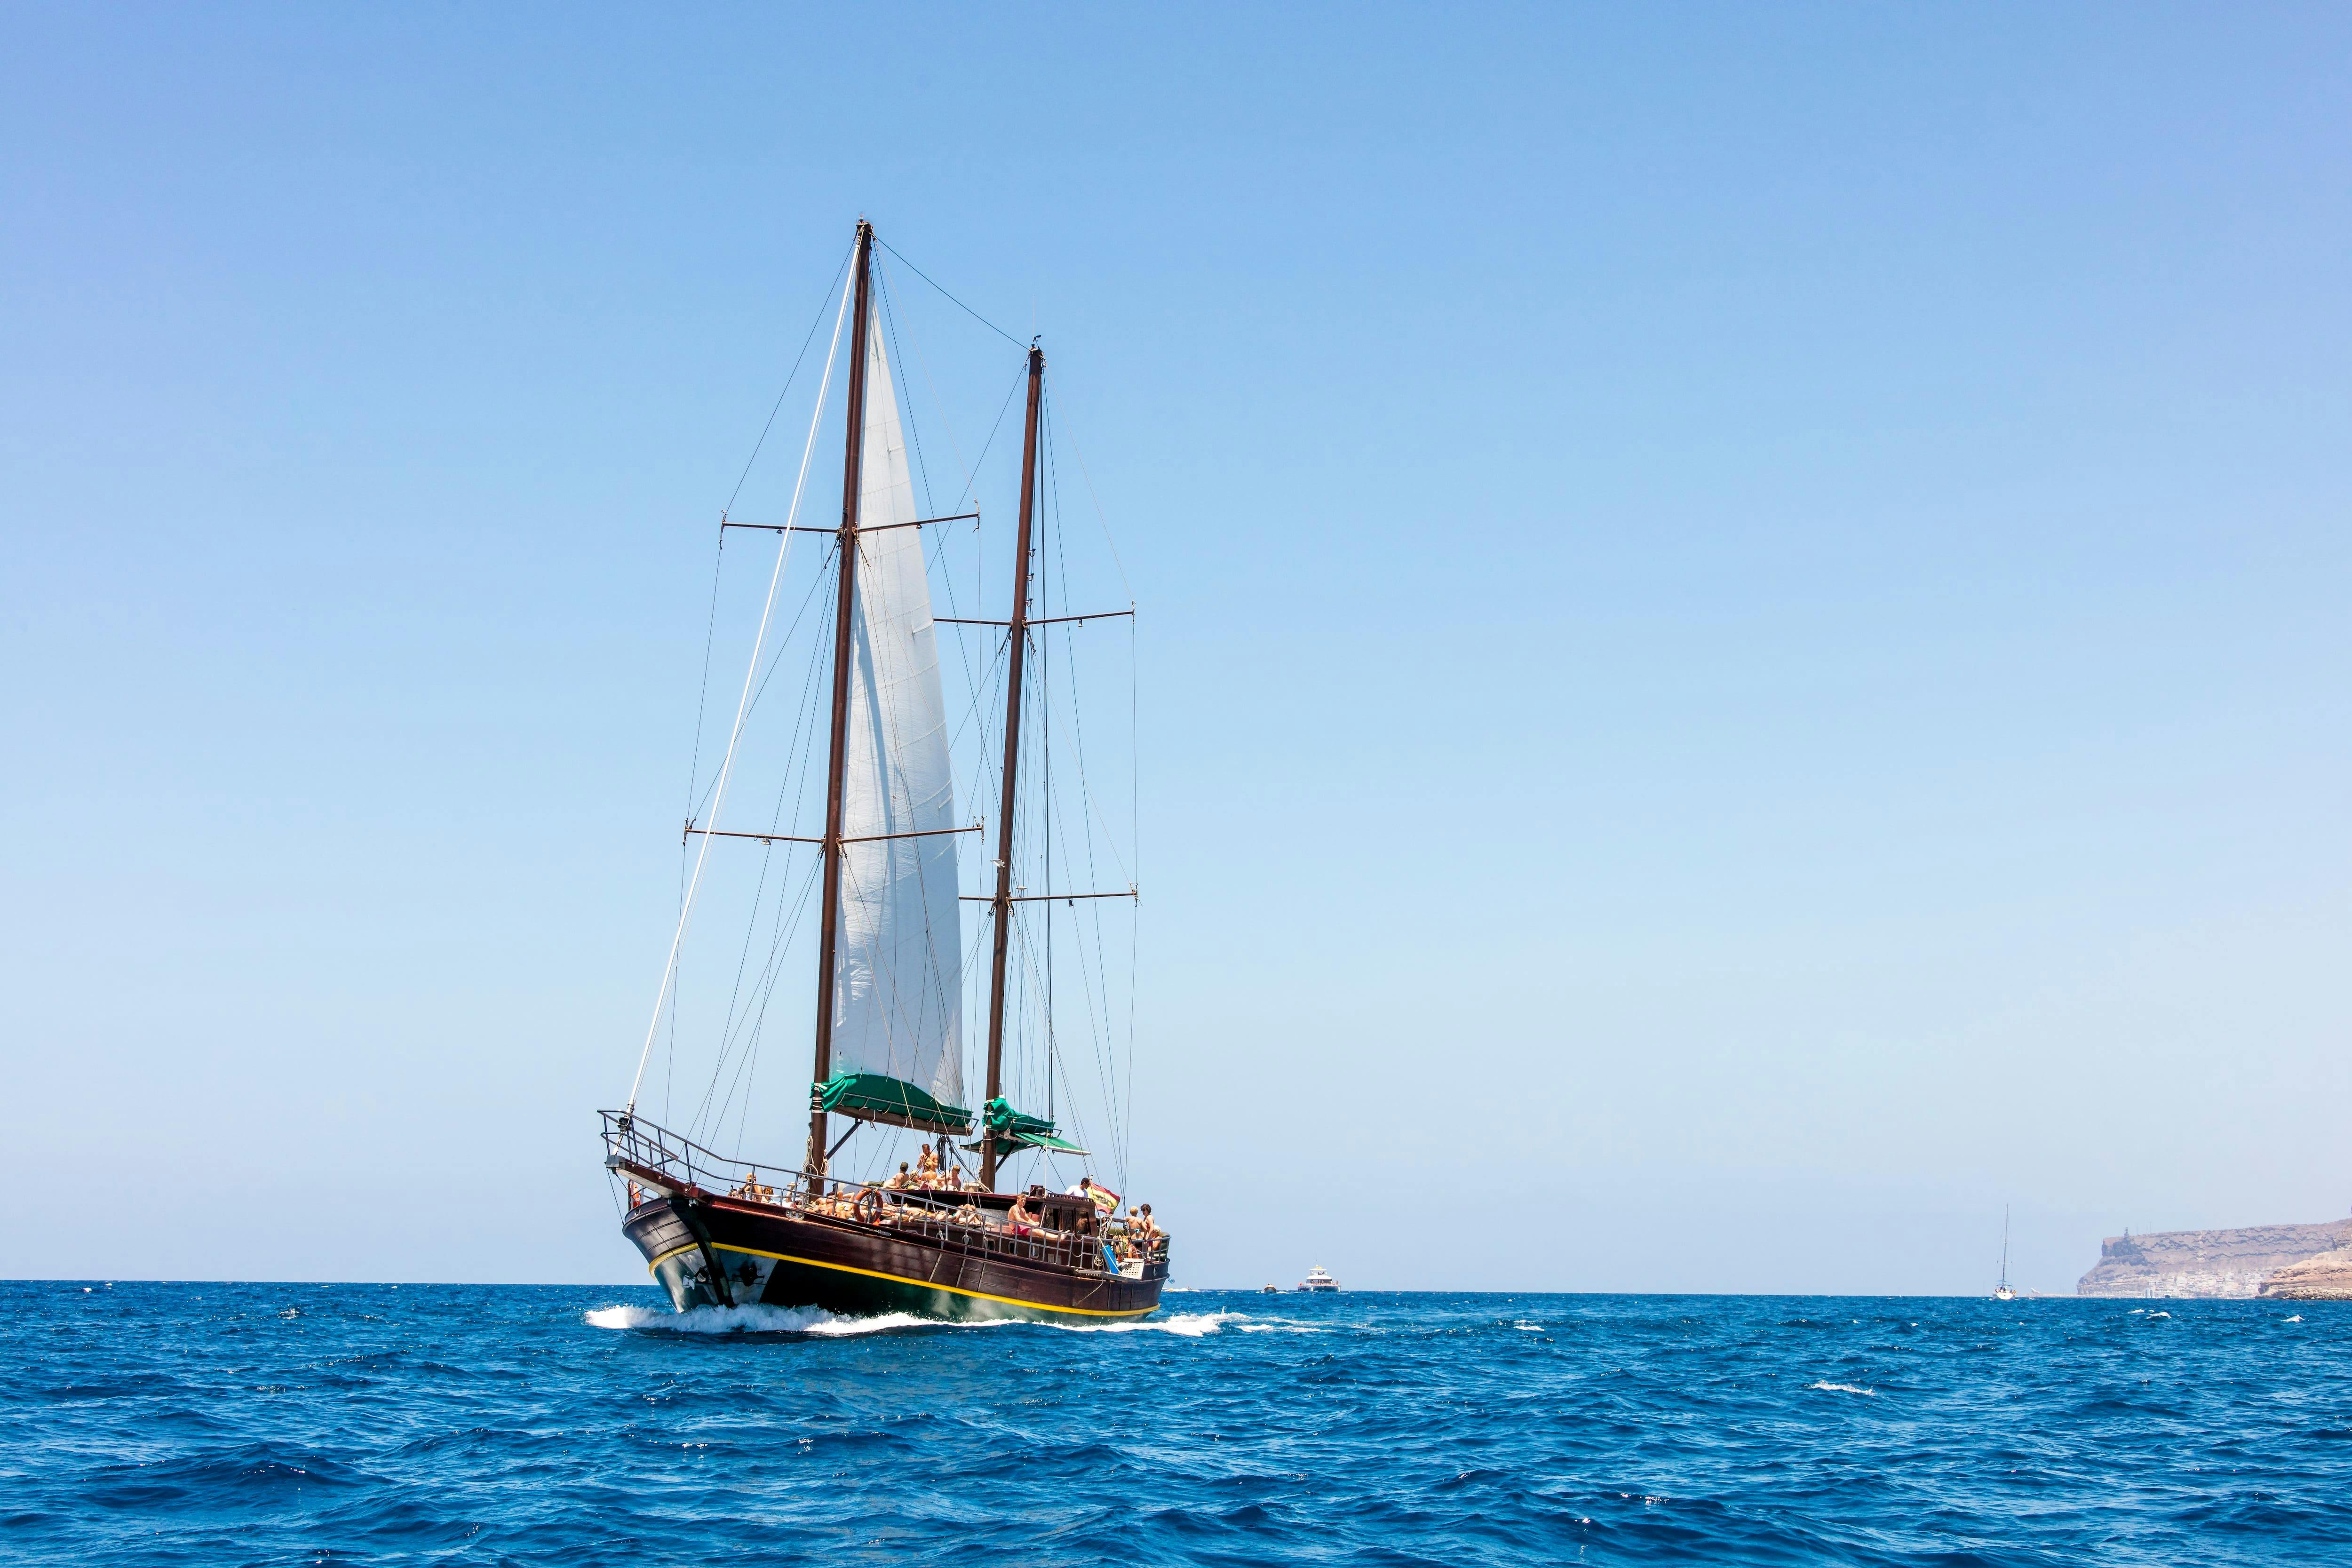 Aphrodite Gulet-Segelbootfahrt auf Fuerteventura